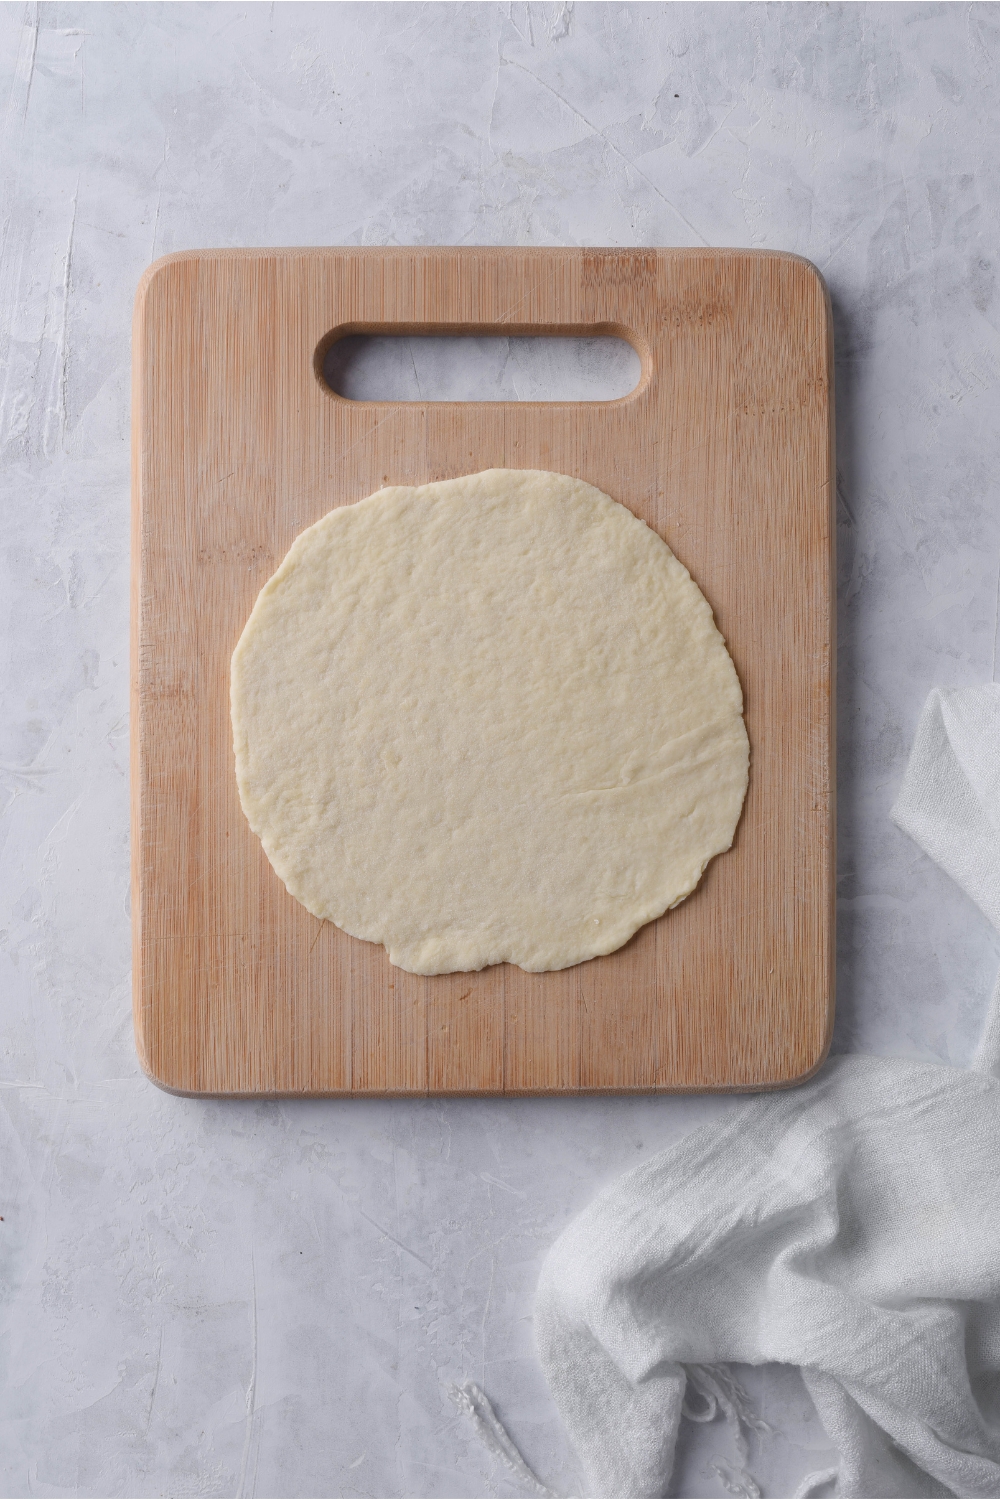 A flat disc of raw dough on a wood cutting board.